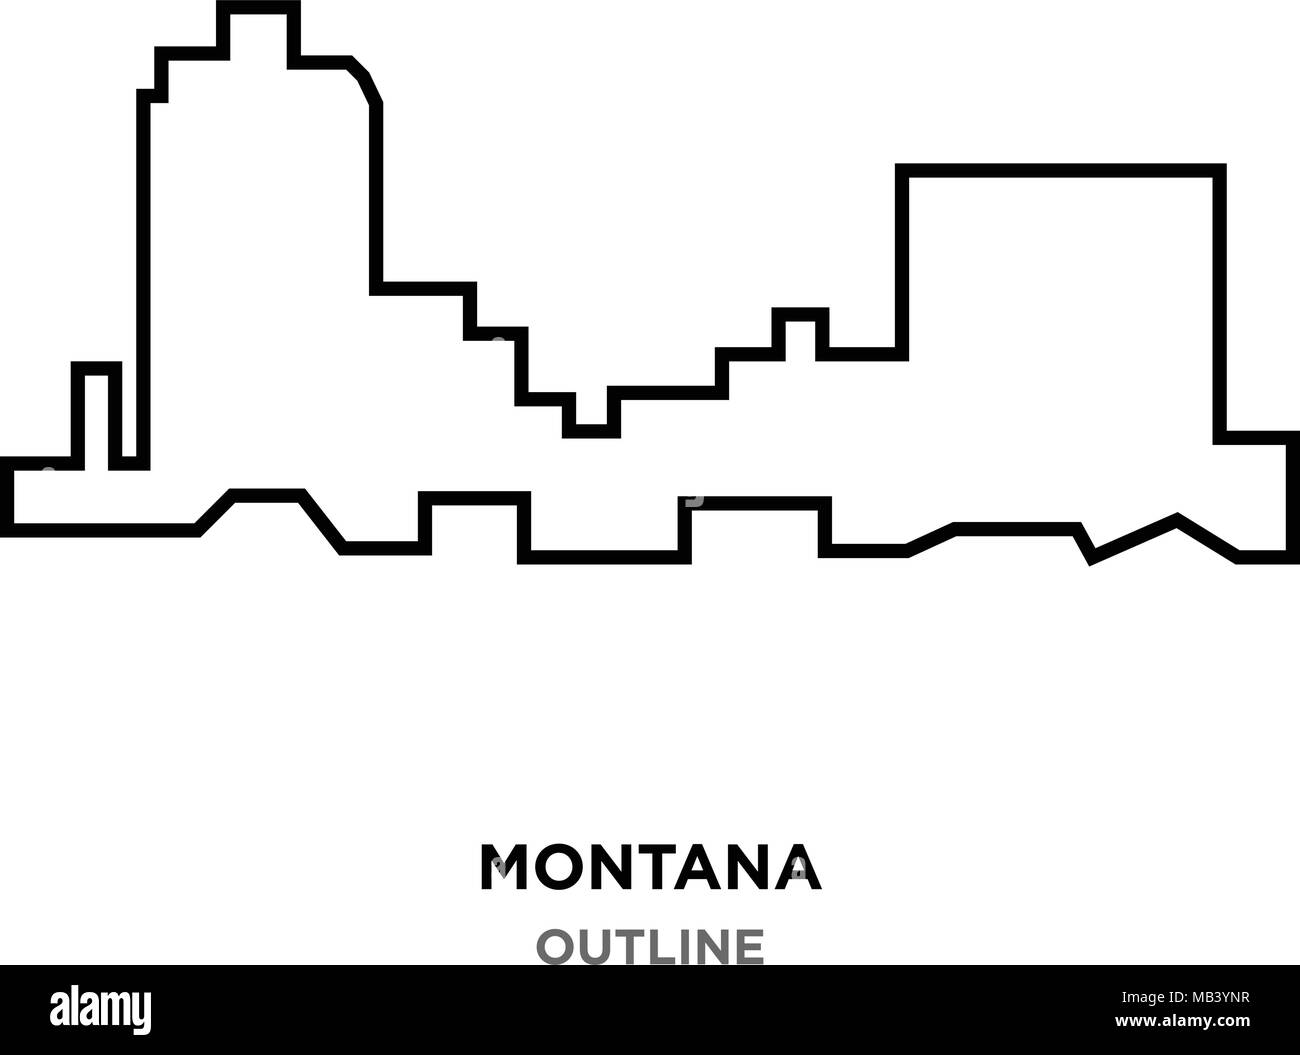 montana outline on white background Stock Vector